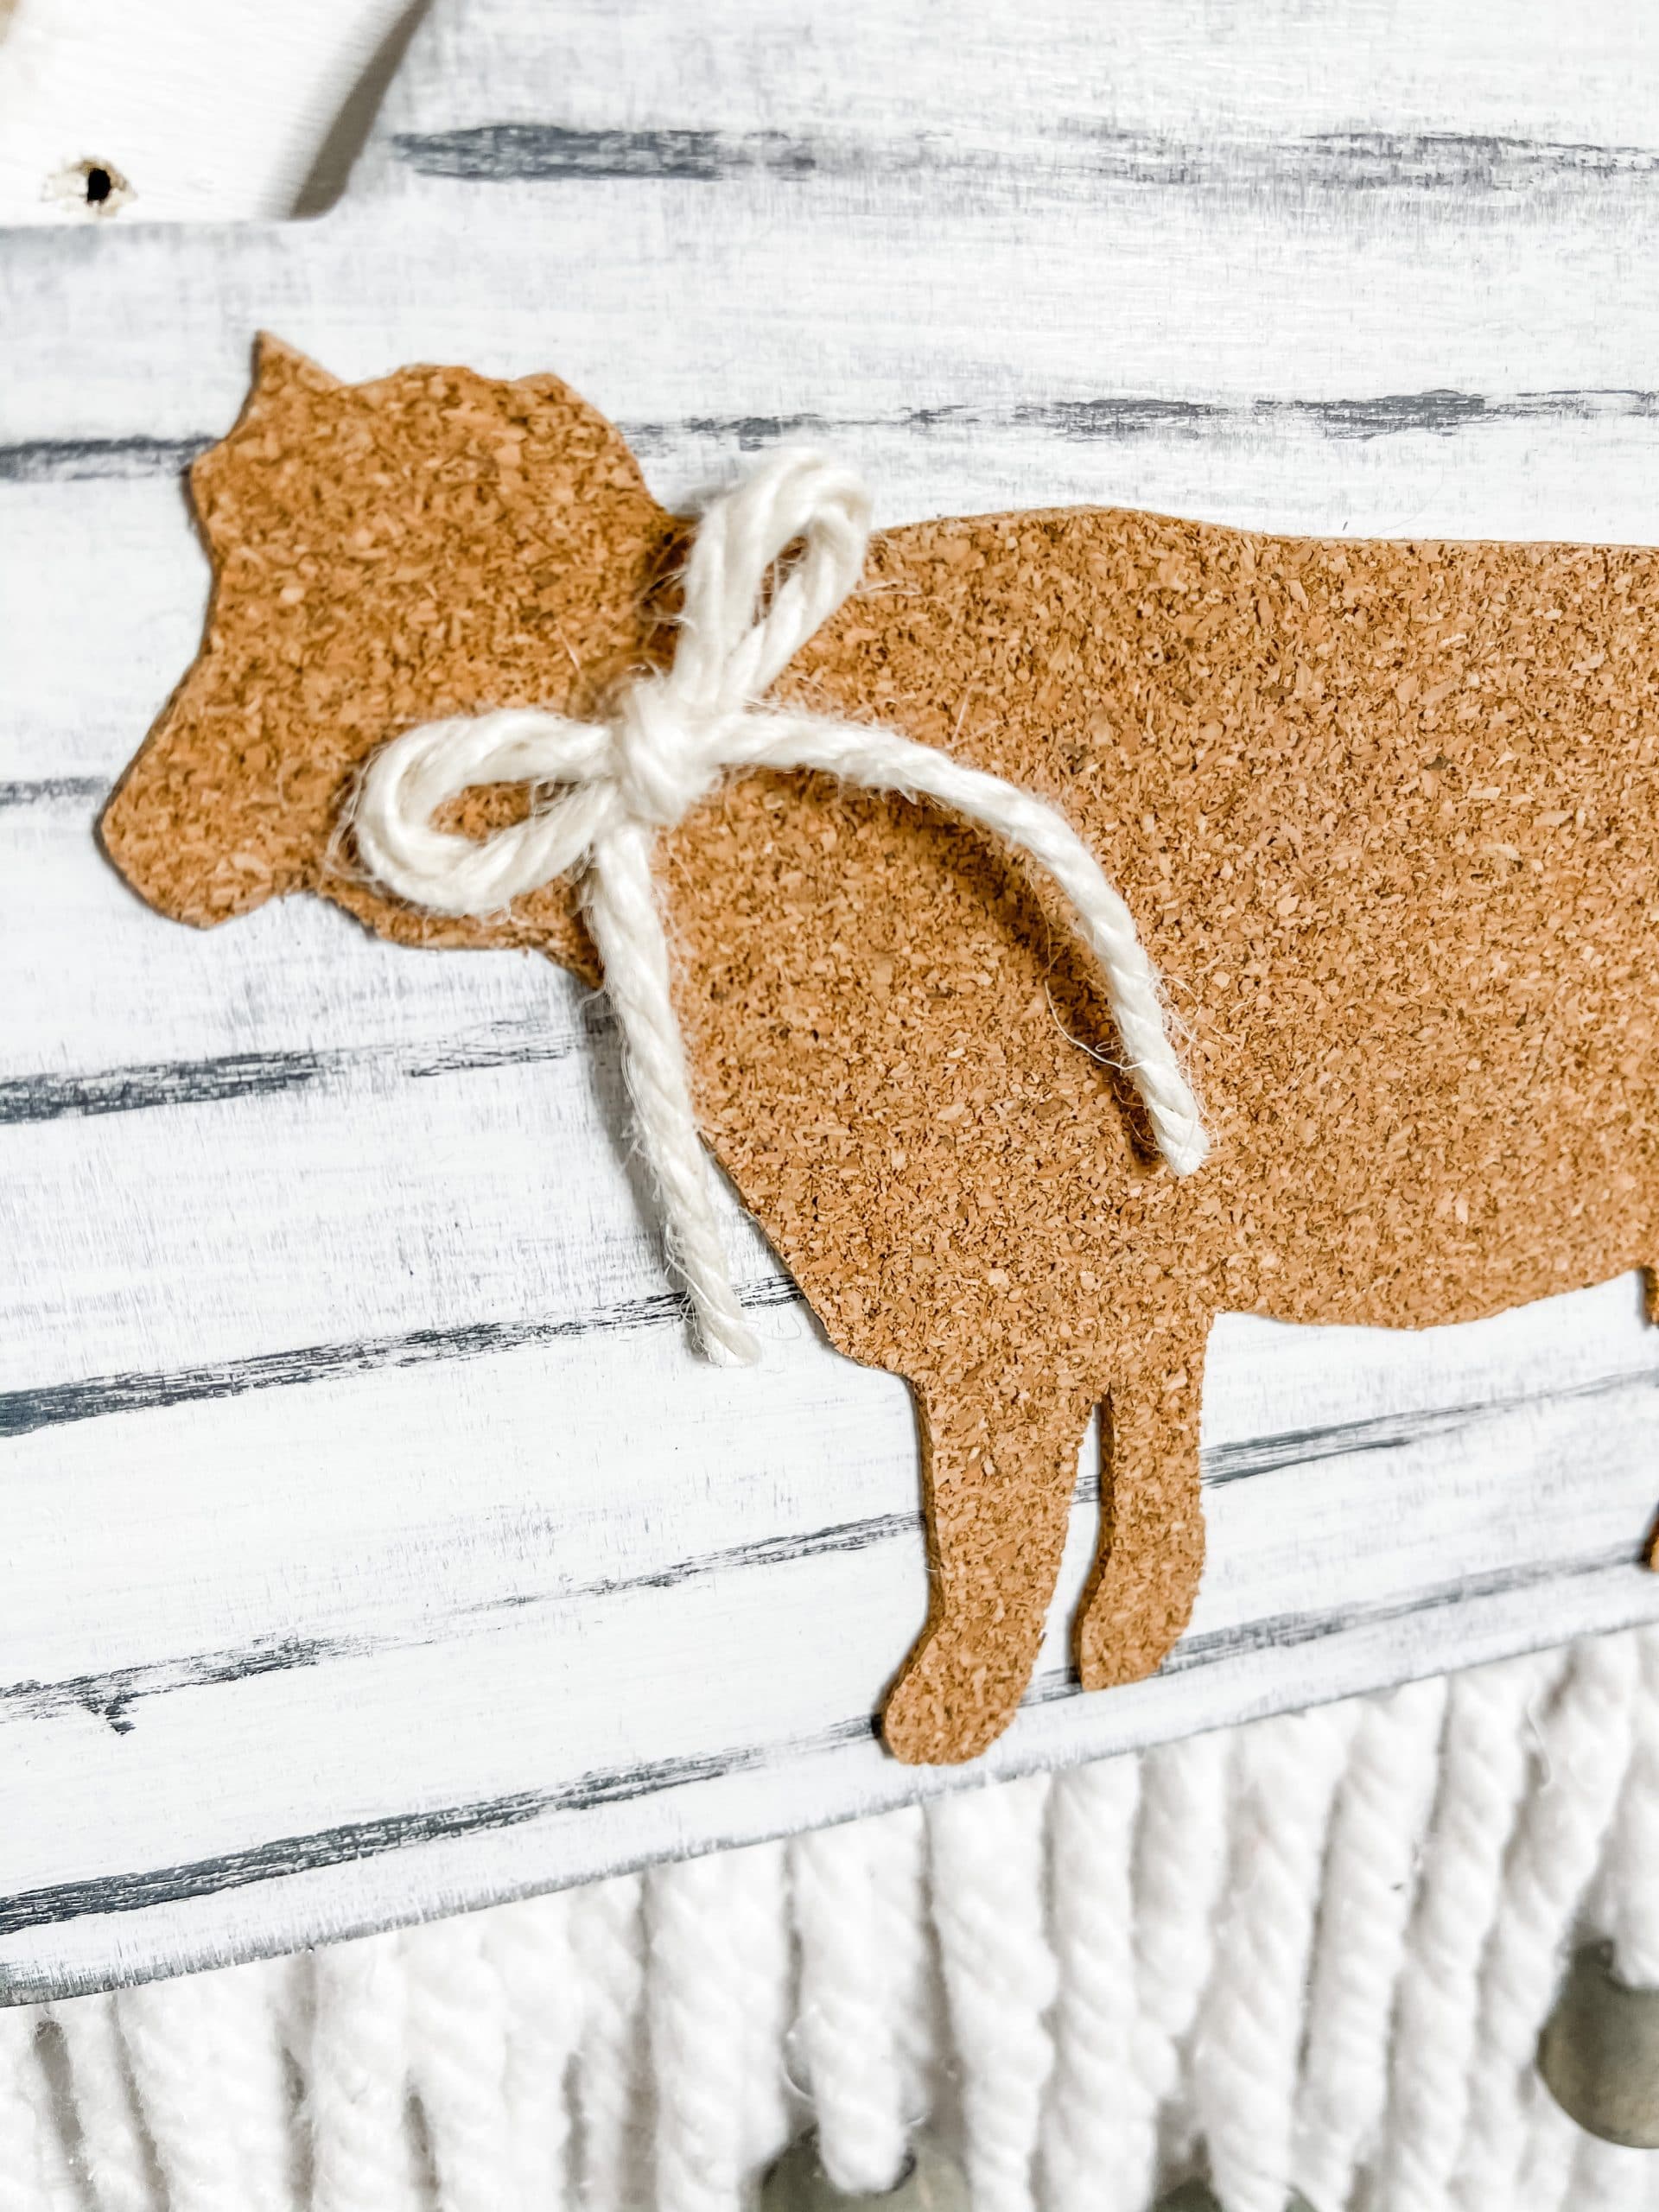 DIY Farmhouse Decor with Corkboard Cow